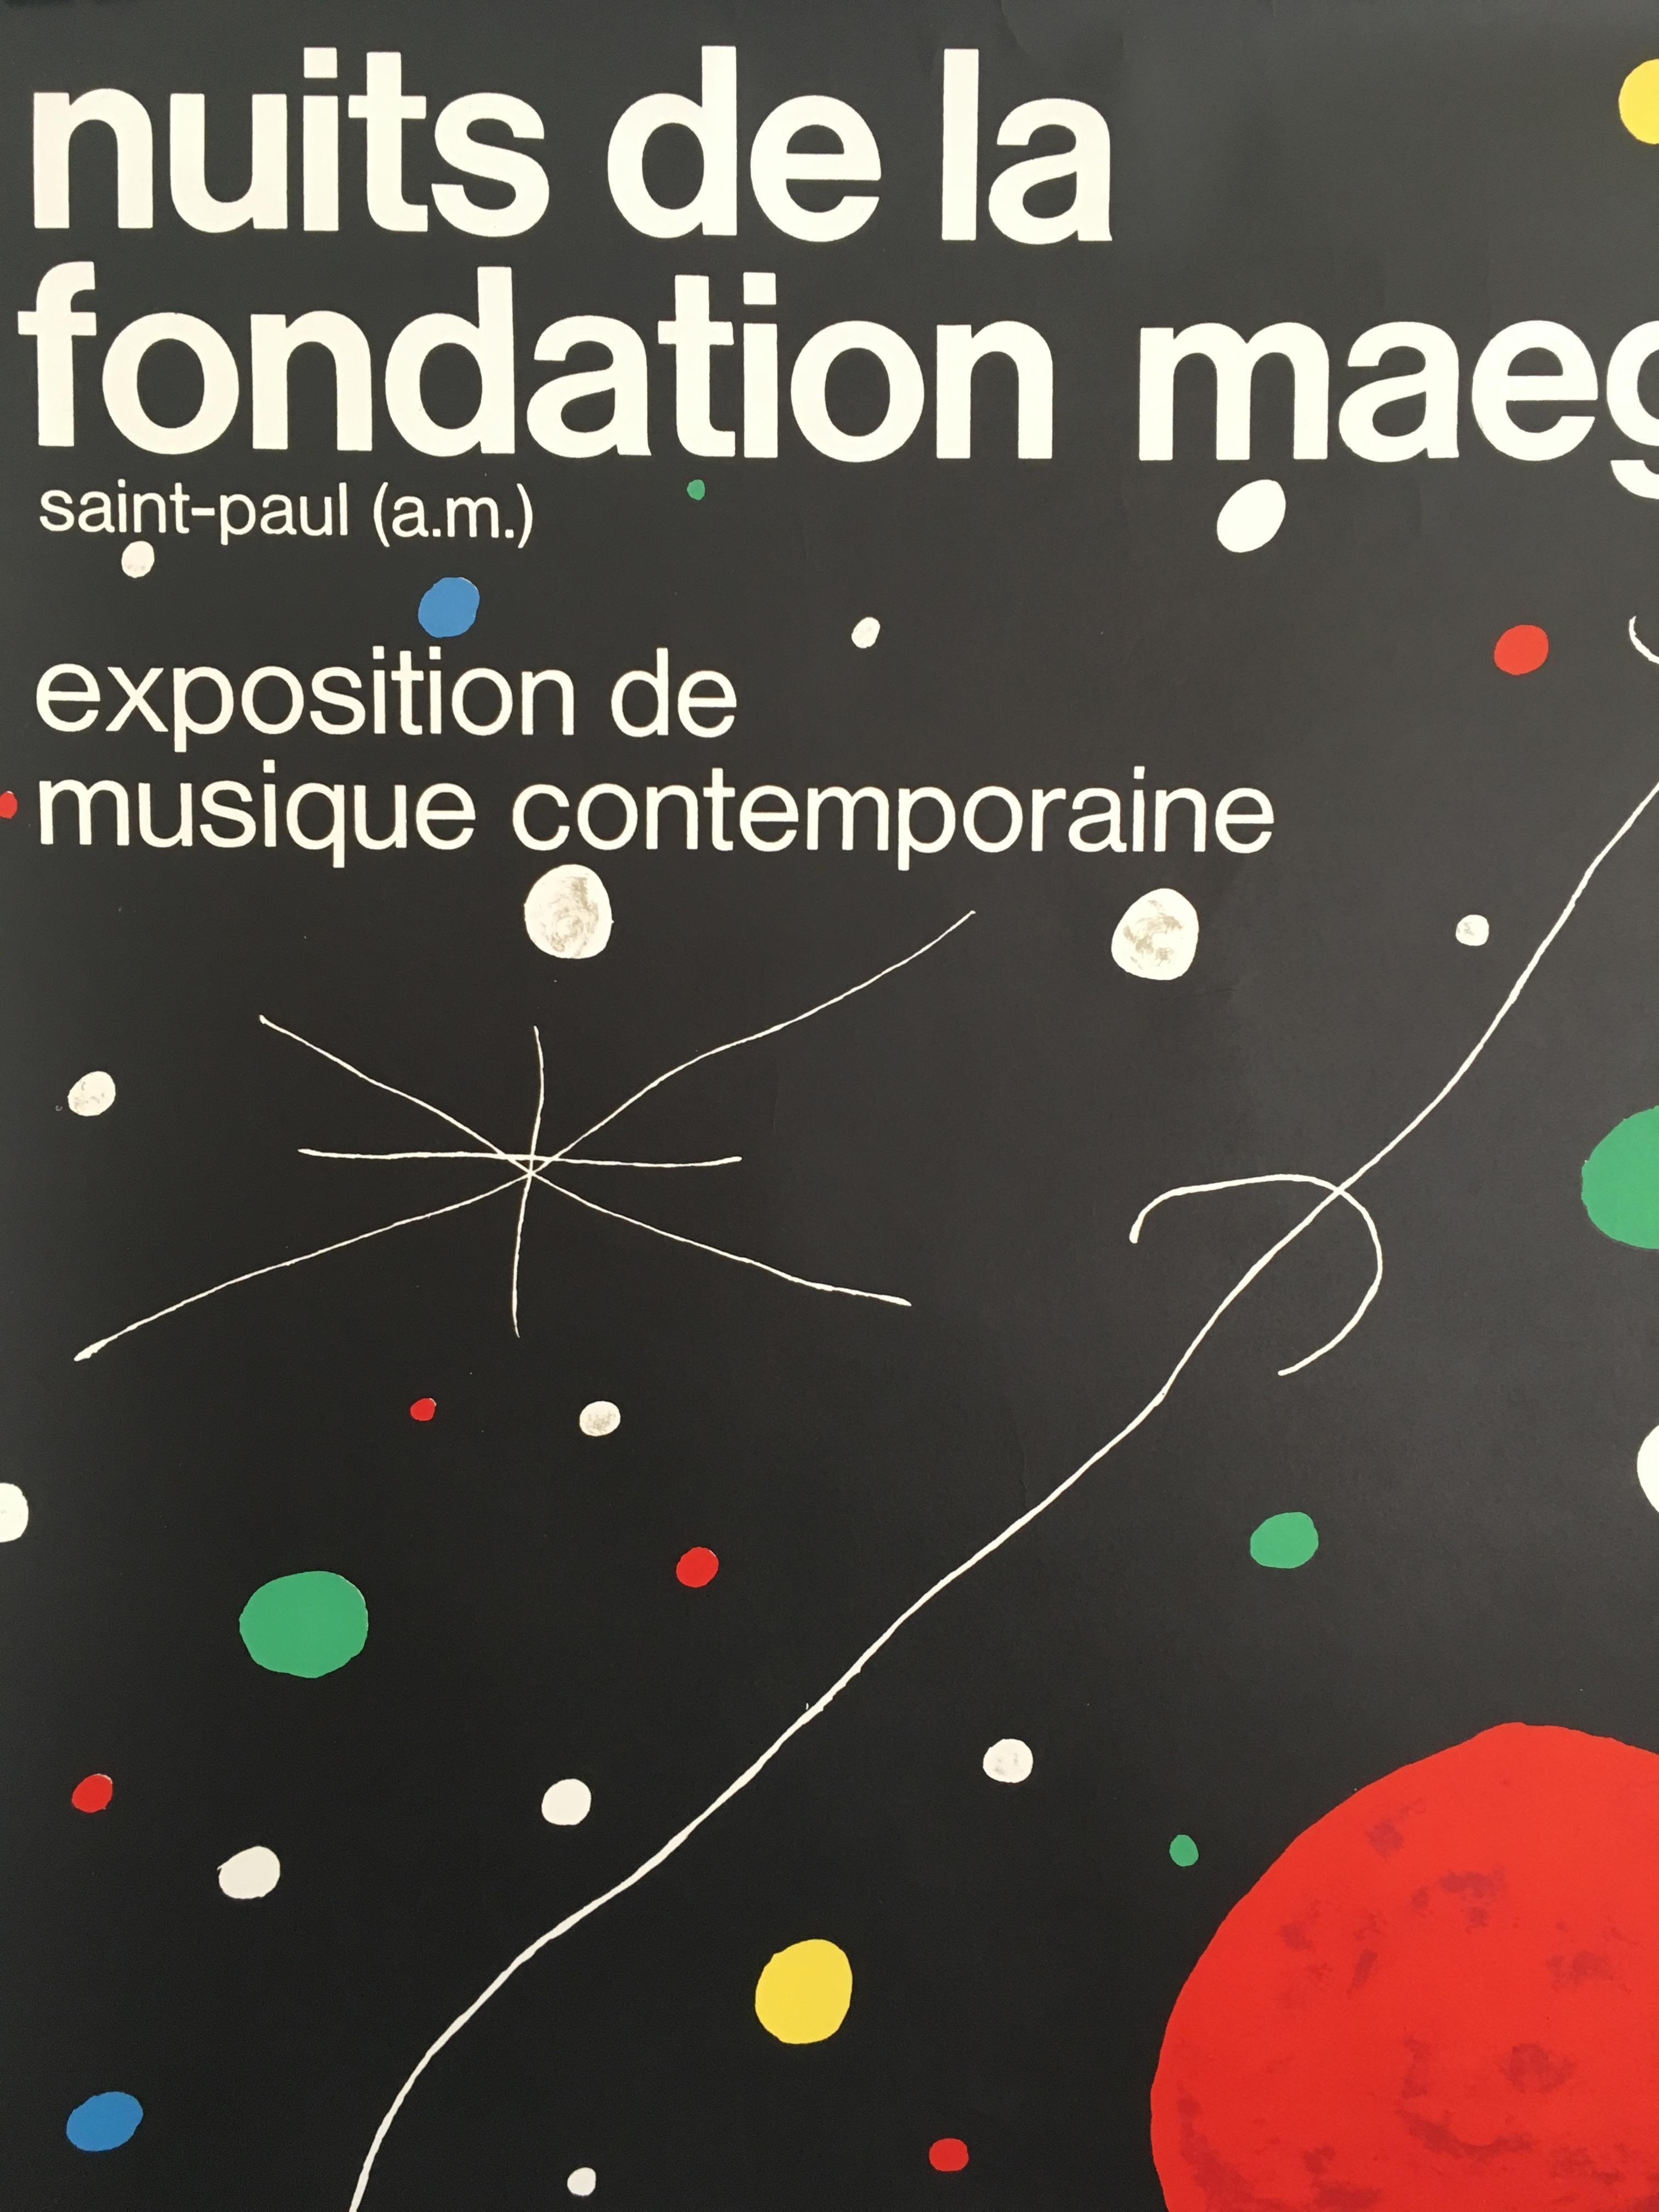 nuits de la fondation maeght poster